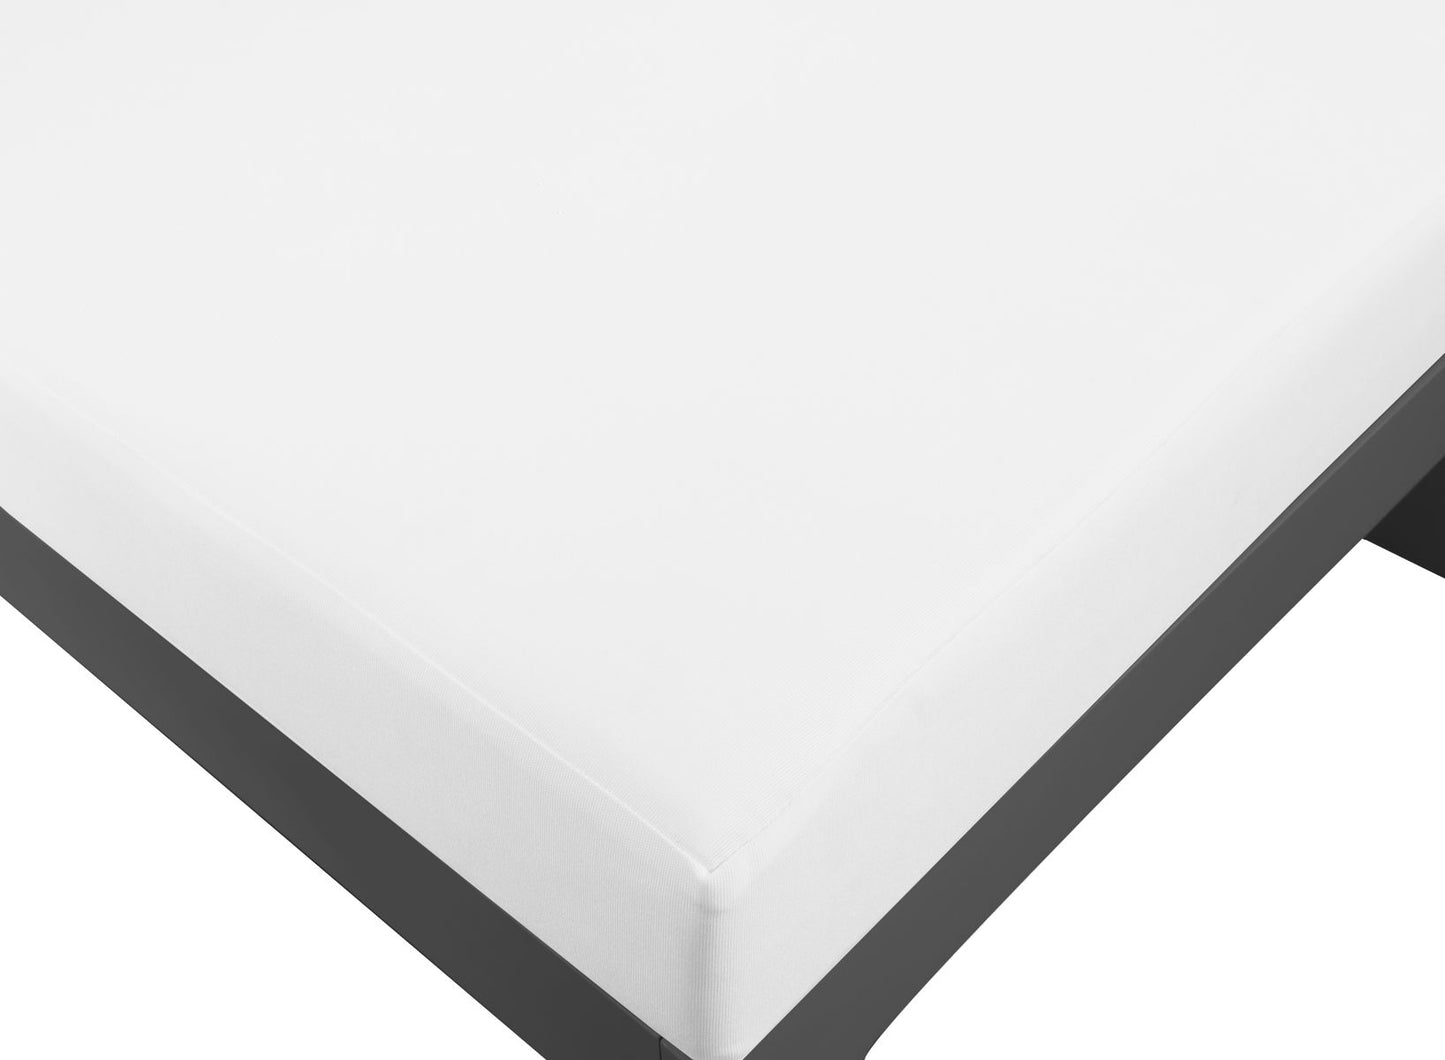 Nizuc - Outdoor Patio Modular Sectional 5 Piece - White